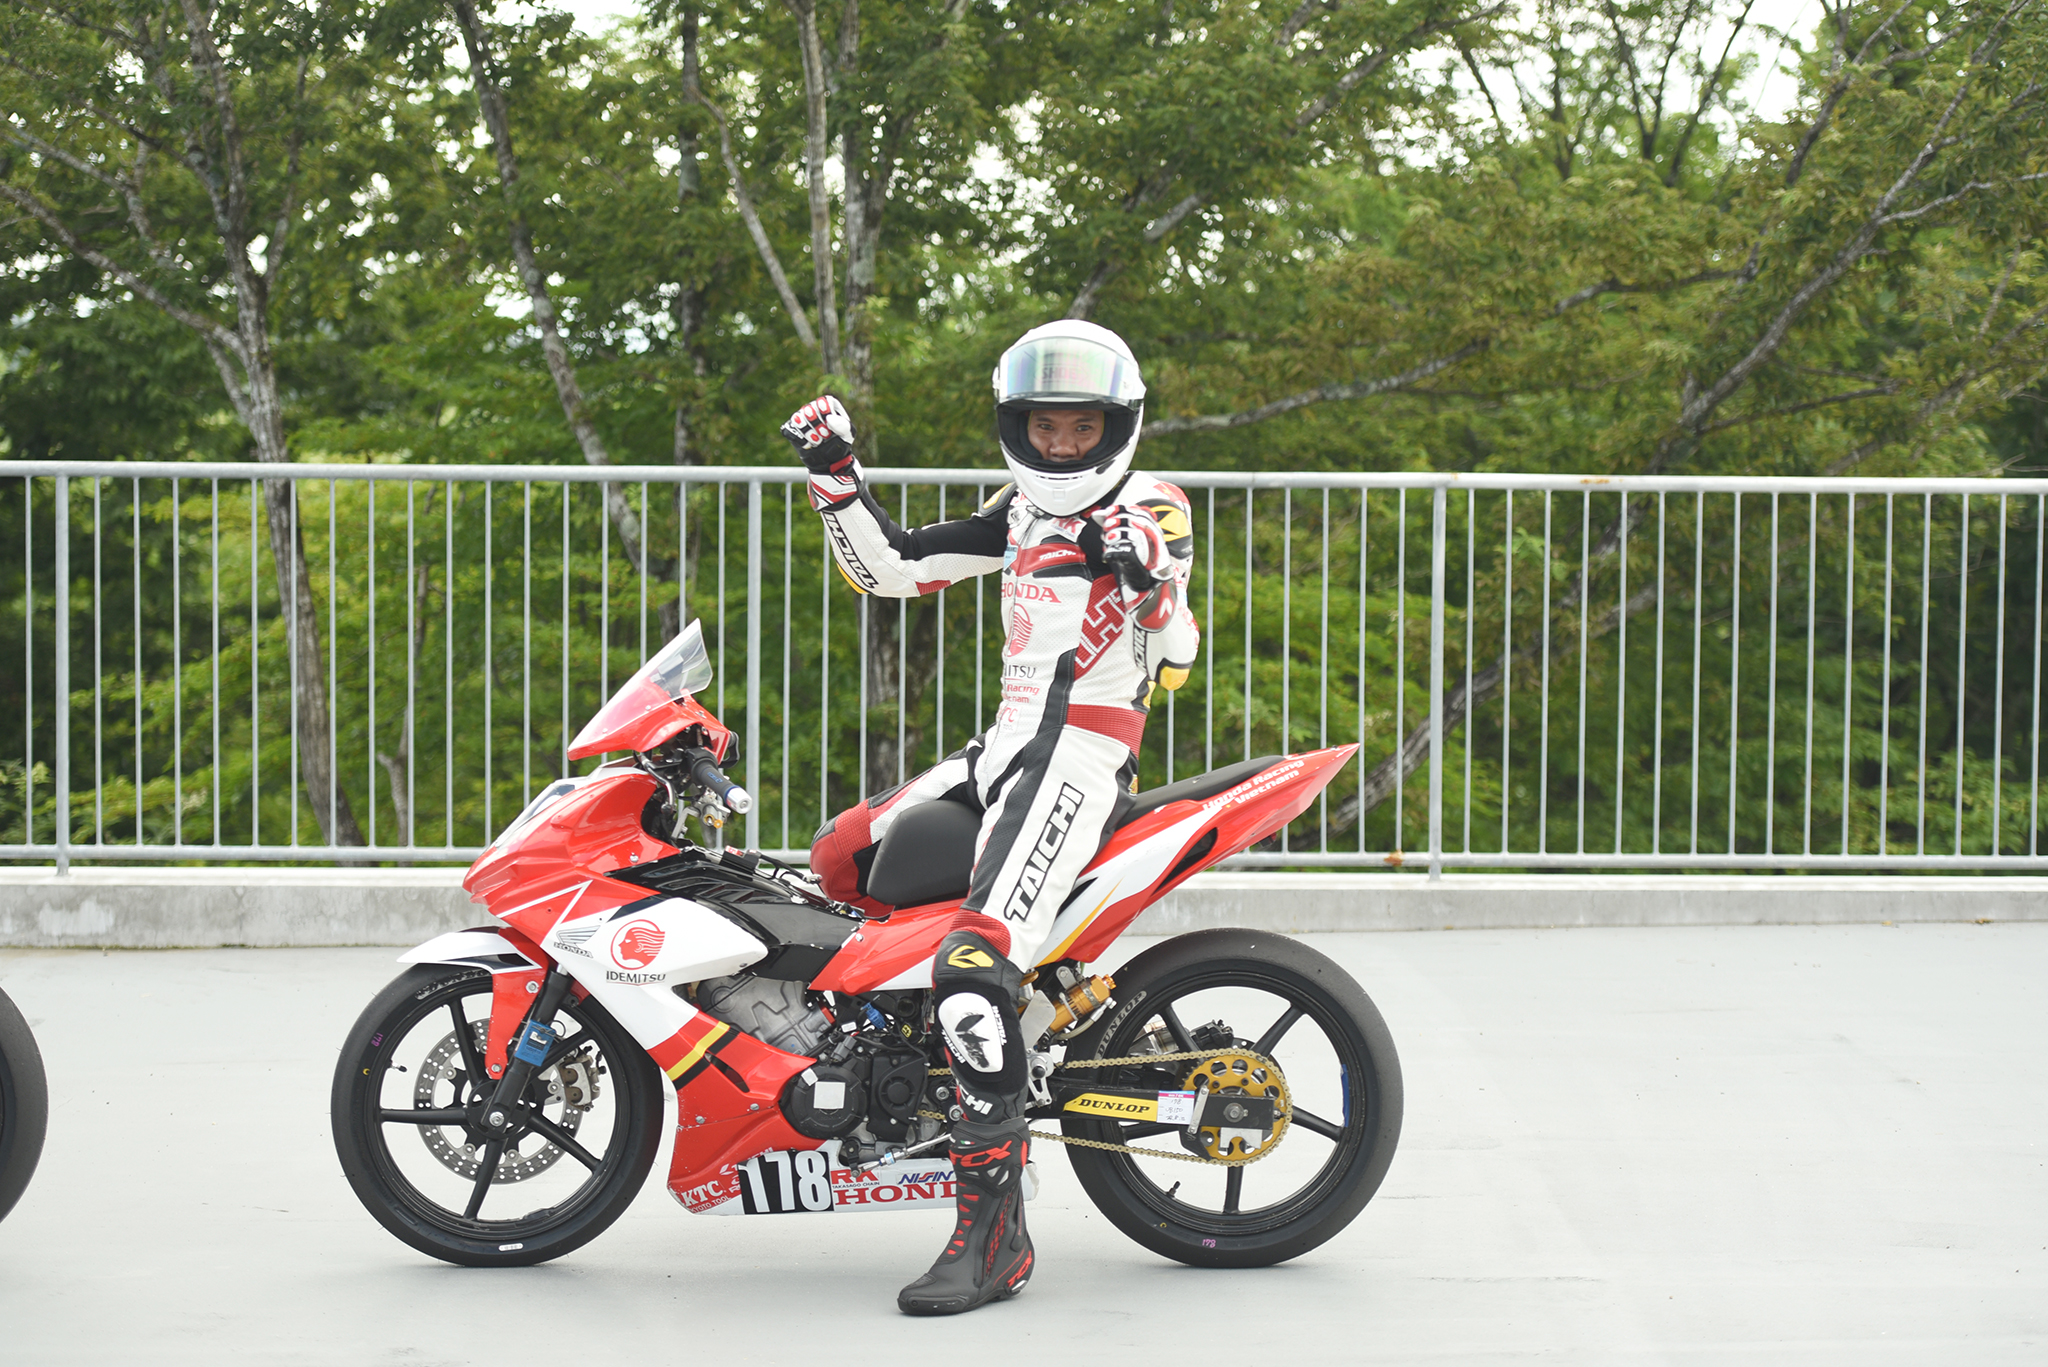 Race 3 ARRC 2022 - A big challenge for Honda Racing Vietnam